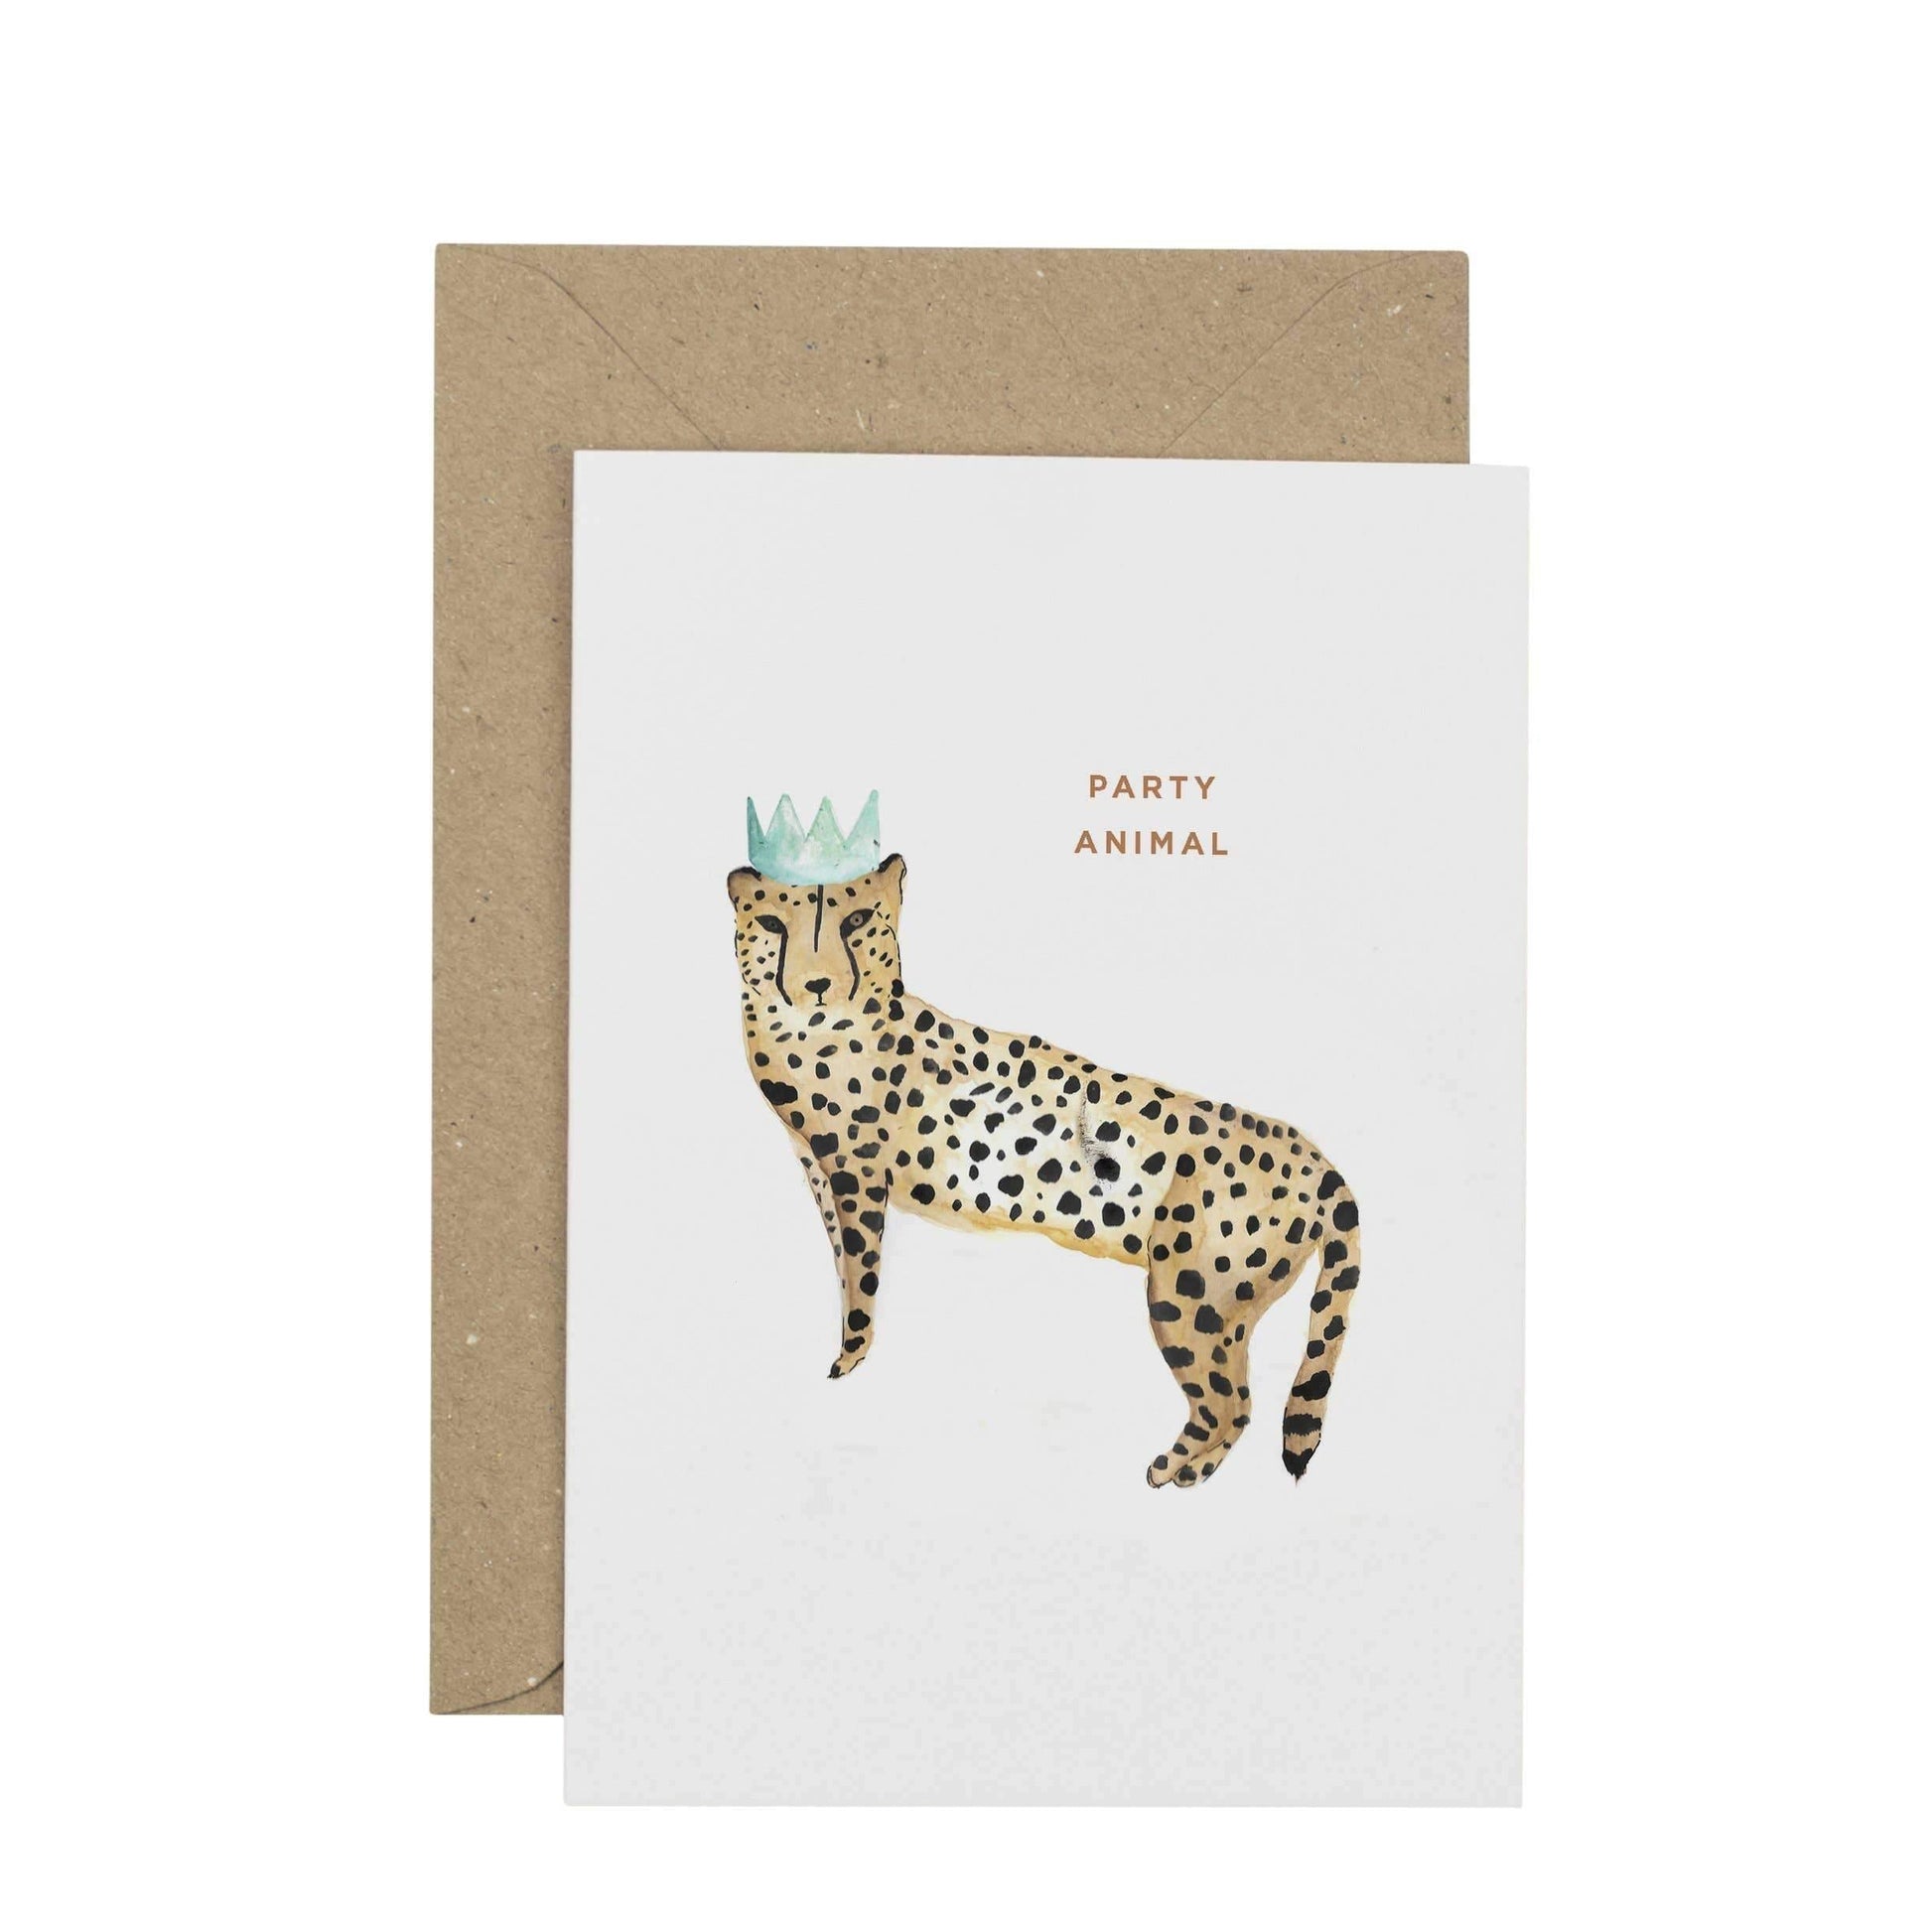 Party Animal Cheetah Greetings Card - Sorelle Gifts